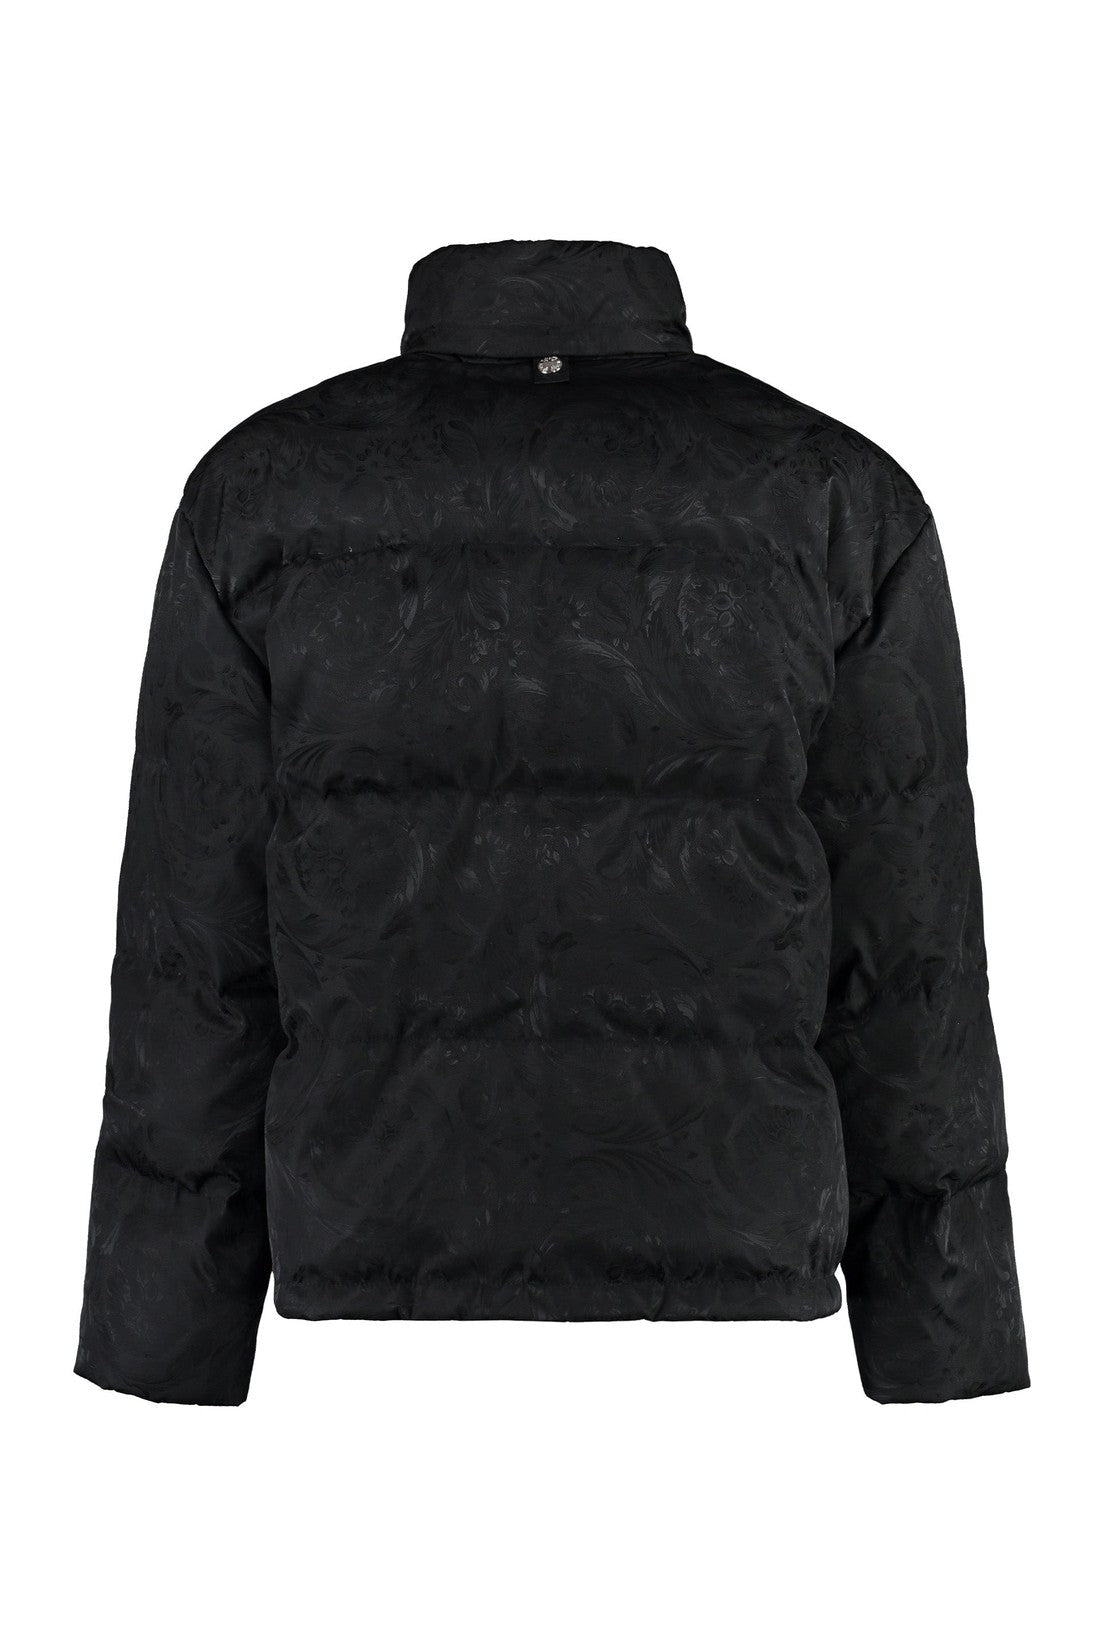 Versace-OUTLET-SALE-Full zip down jacket-ARCHIVIST